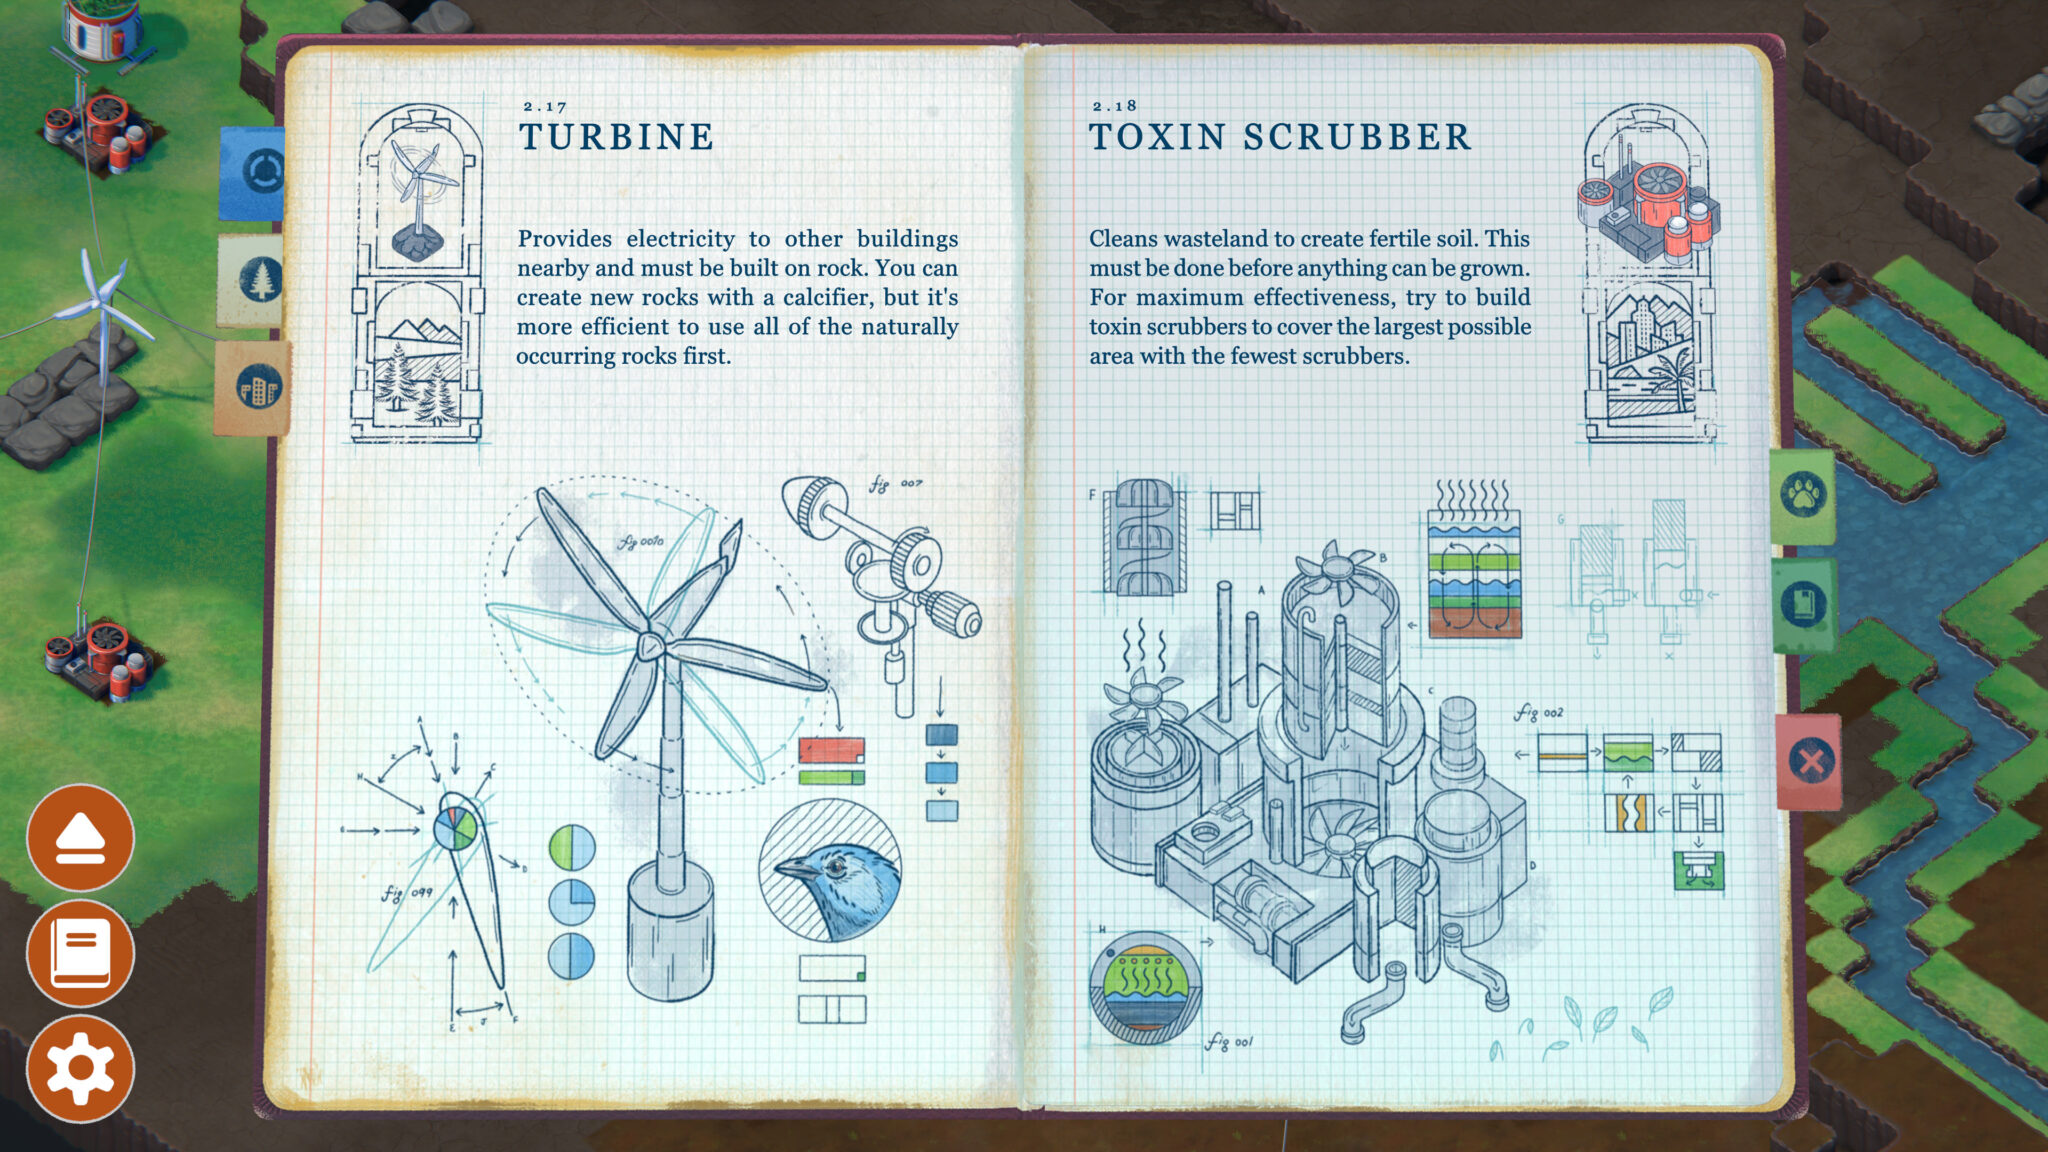 guidebook in Terra Nil describing how the Turbine and toxin scrubber work